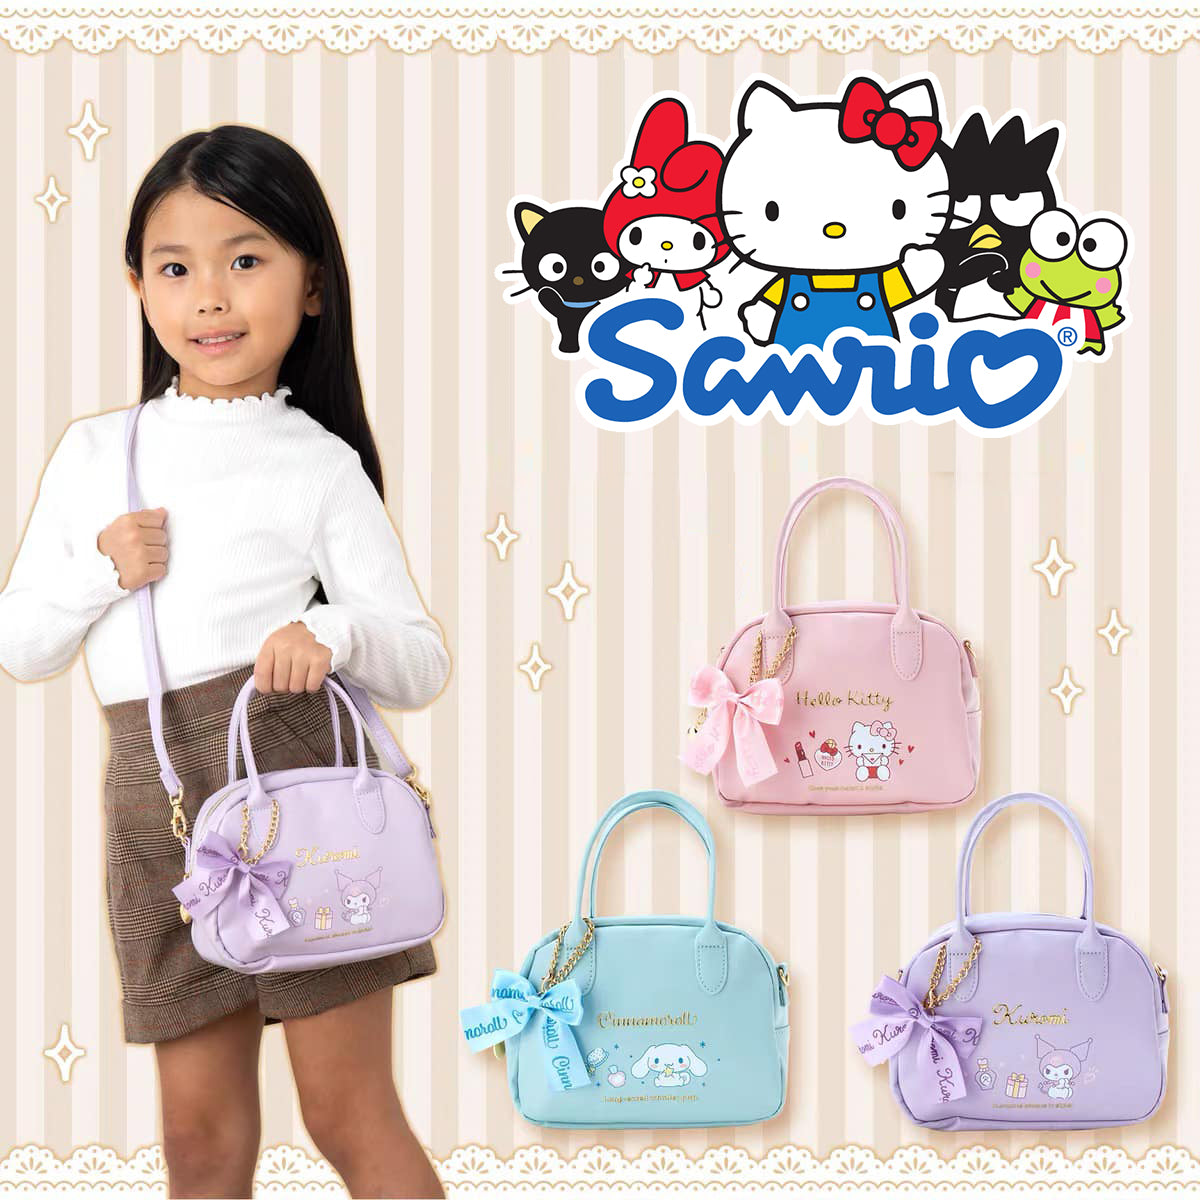 Boston Bag - Sanrio Characters Small (Japan Limited Edition)